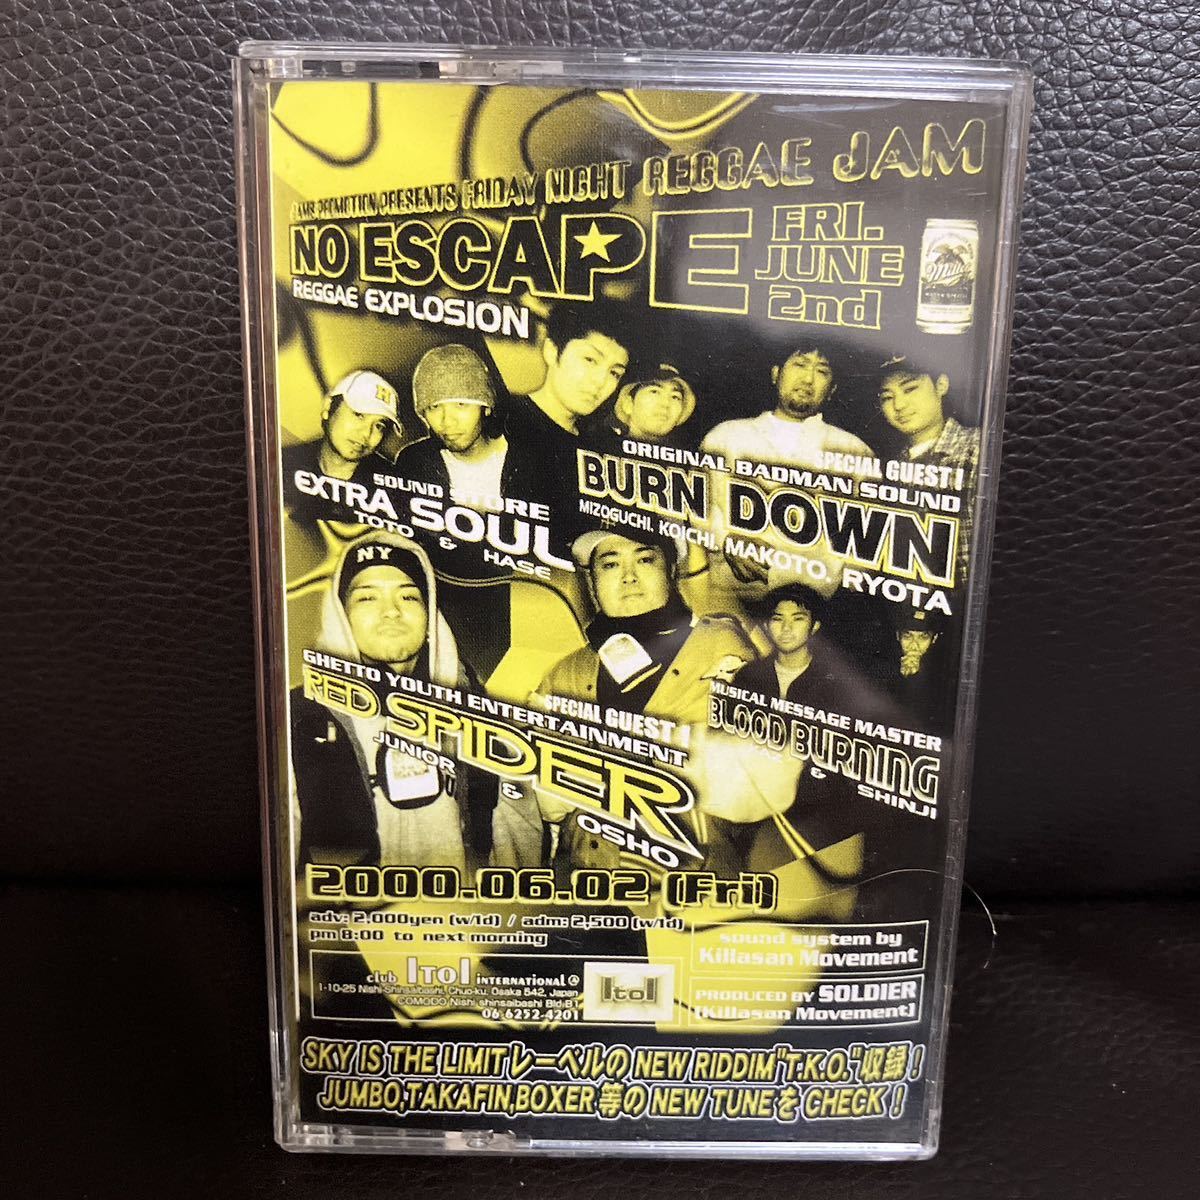 日本最級 RED DJ MIXTAPE REGGAE CD付 SPIDER KOCO KIYO MURO DESIER